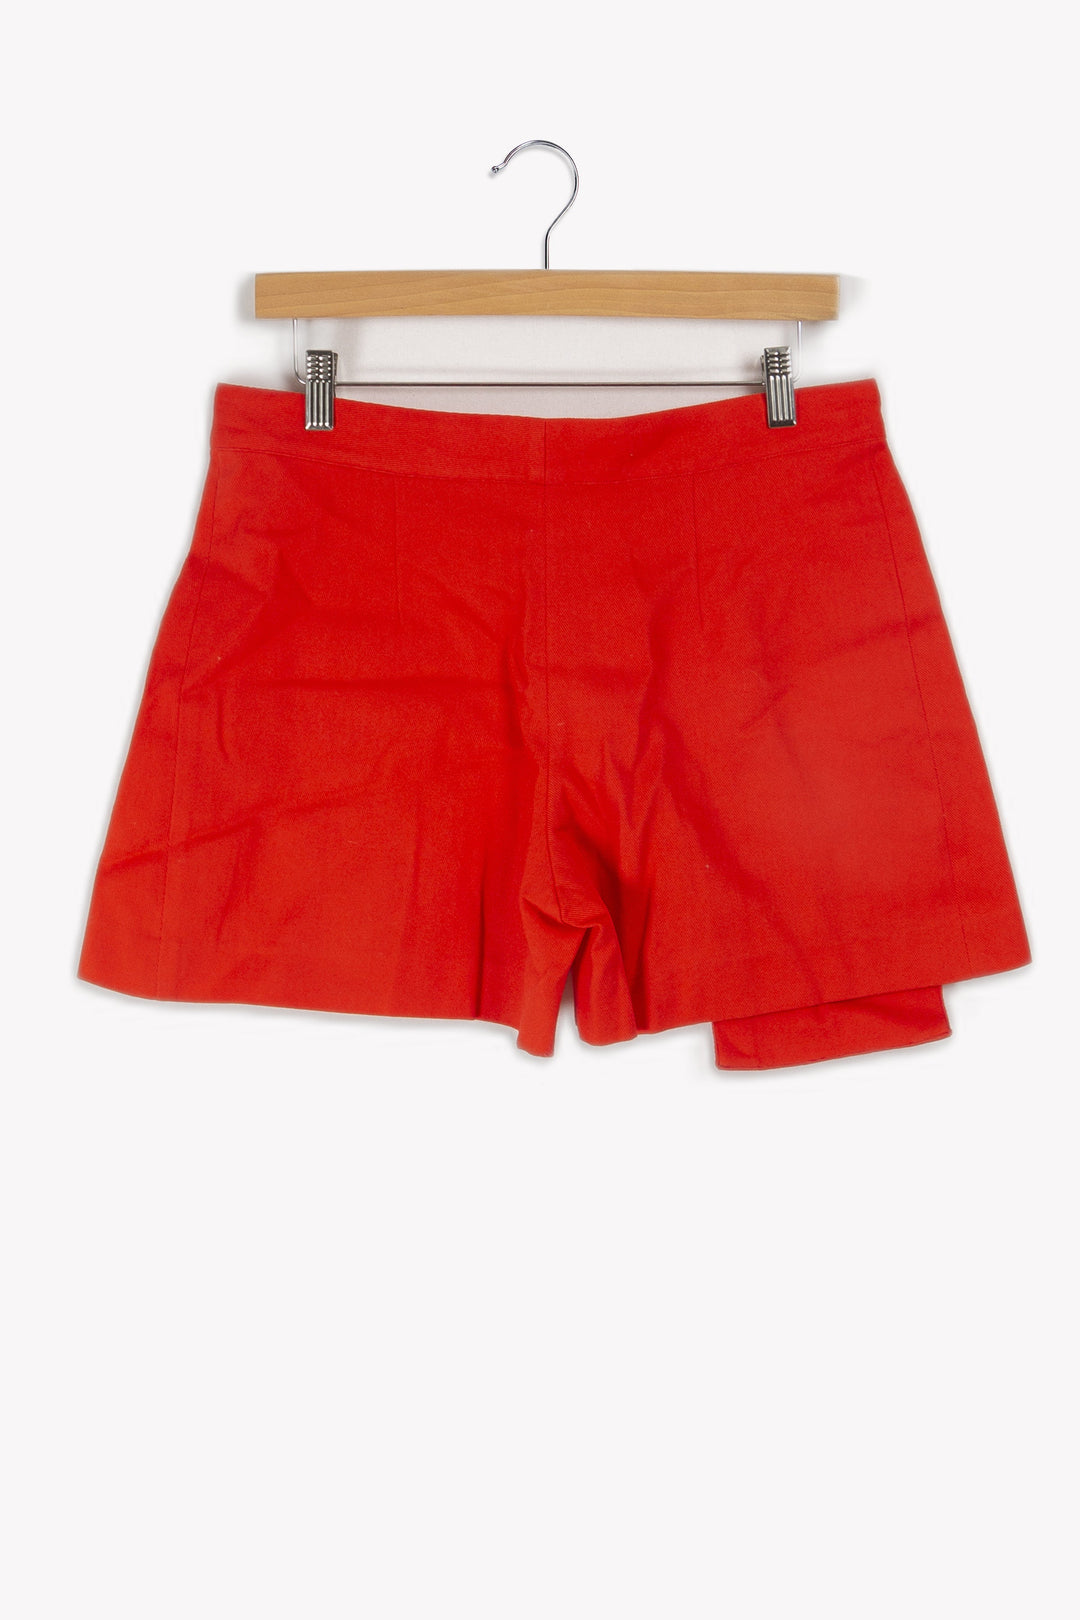 Rote kurze Shorts – 38